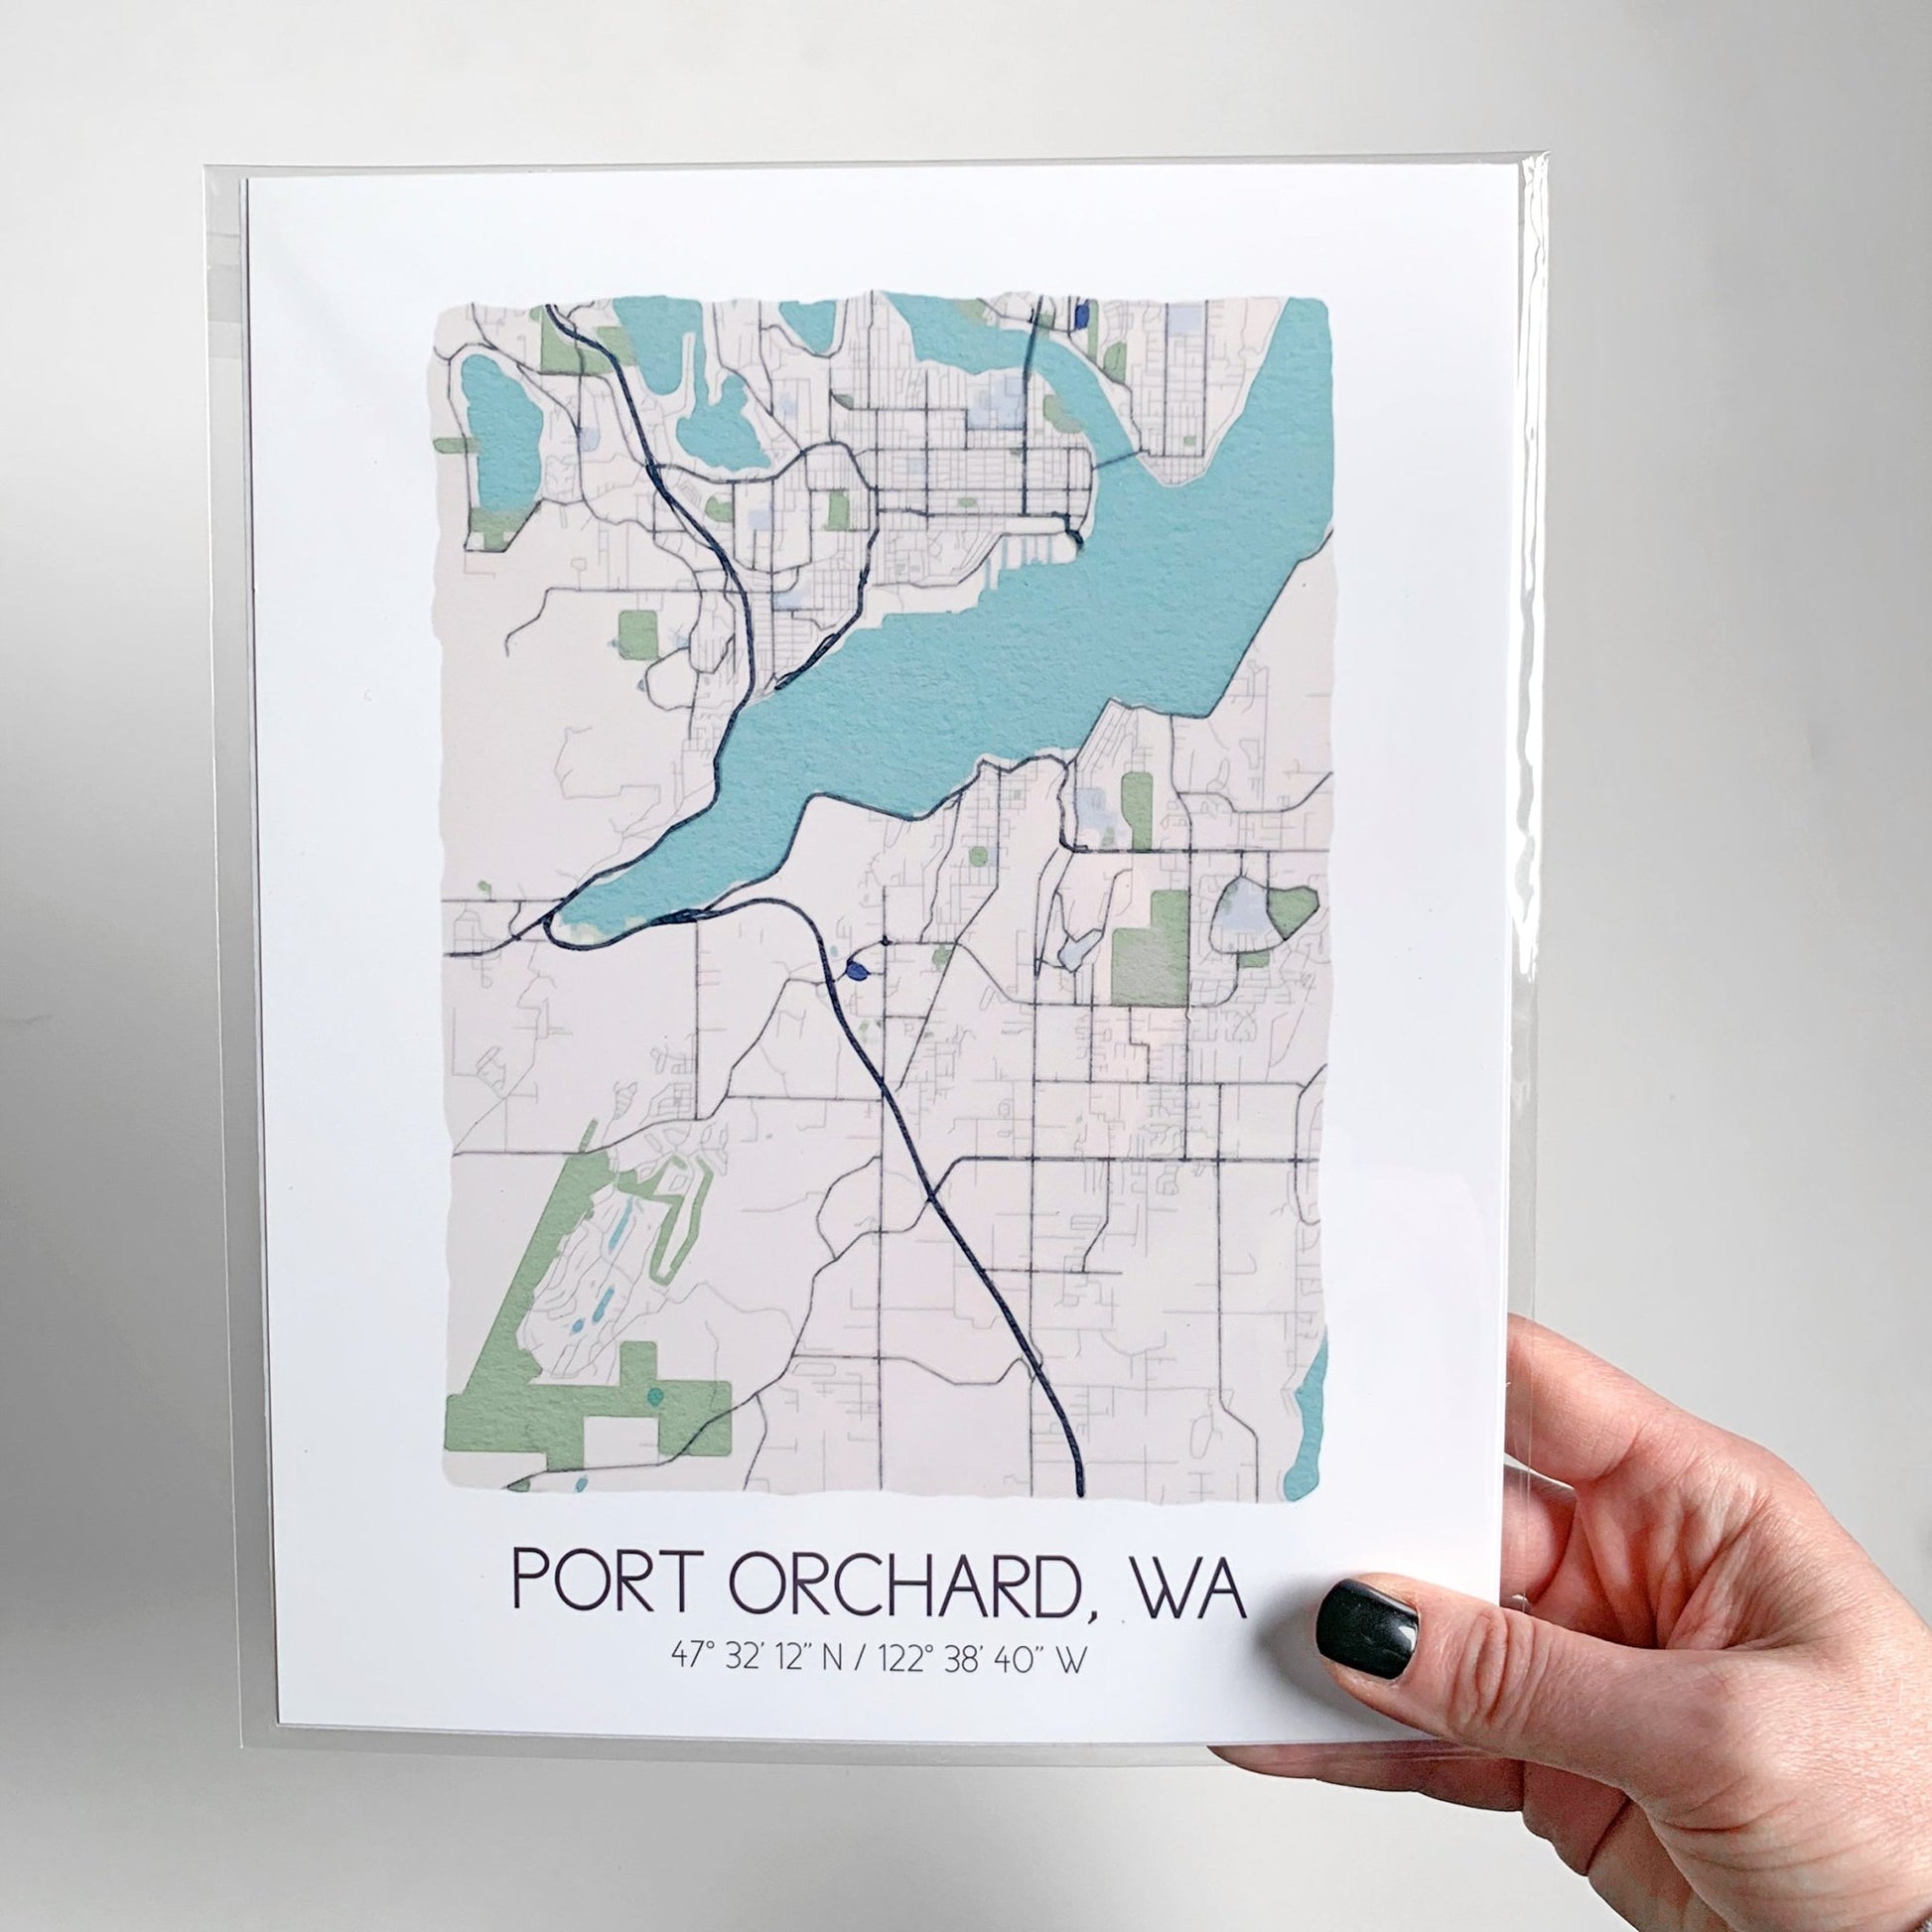 Custom City Map Print - City Map Souvenir of Your Hometown